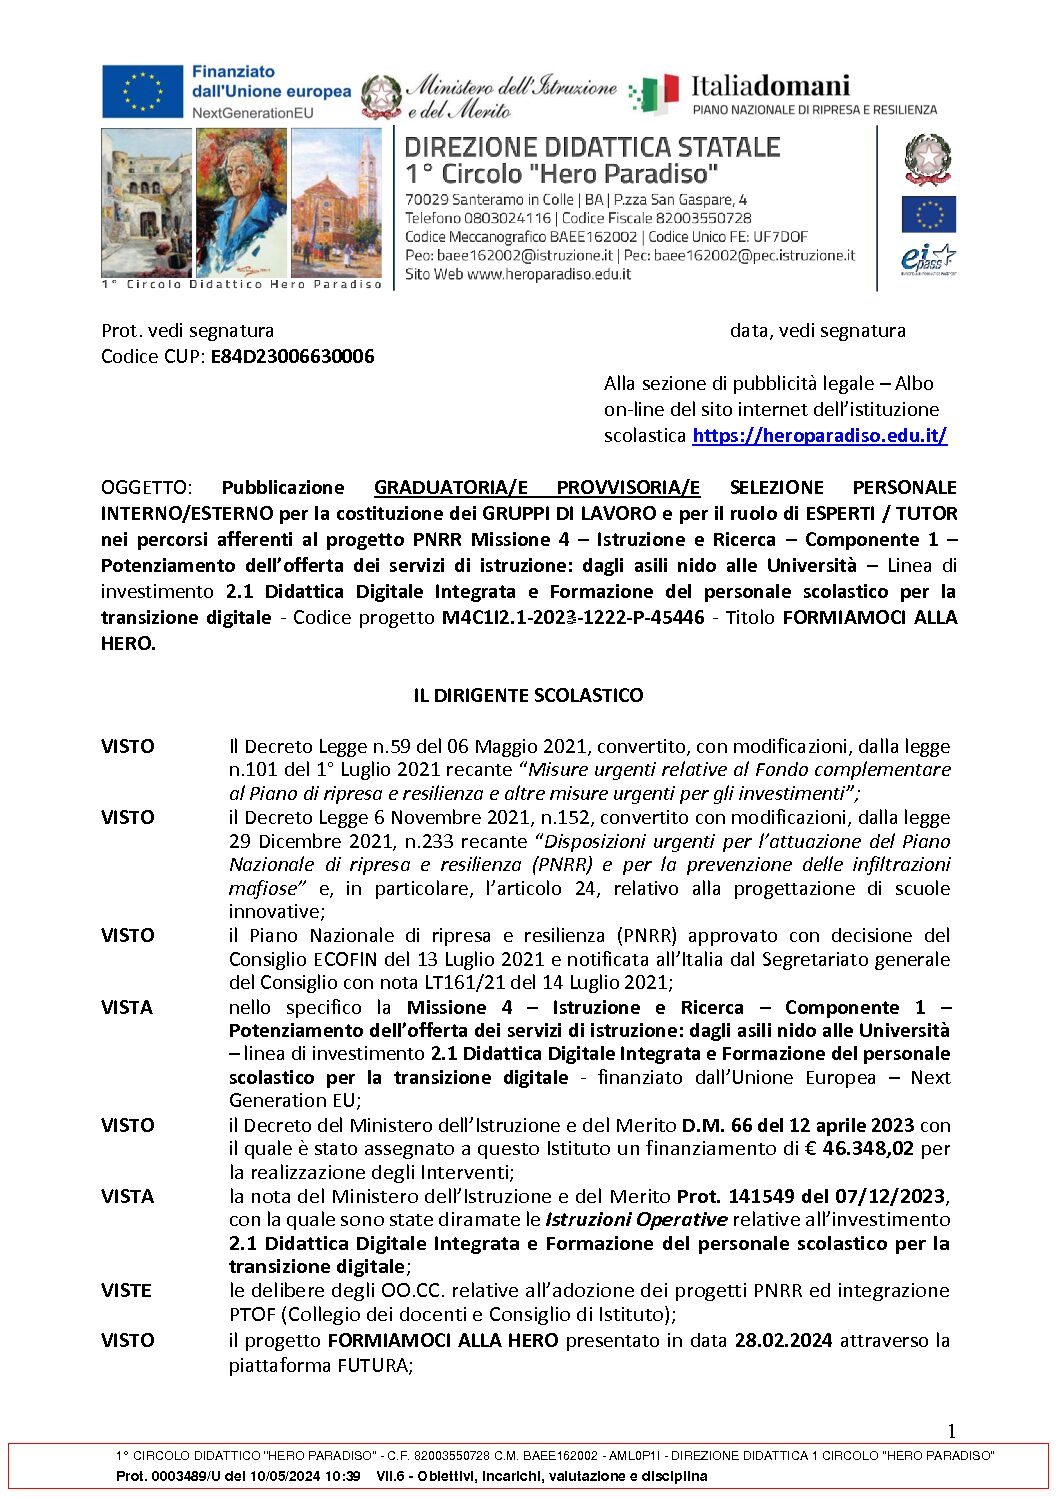 5._Graduatoria_Provvisoria_Esperti_e_Tutor_PNRR_DM66.pdf.pades